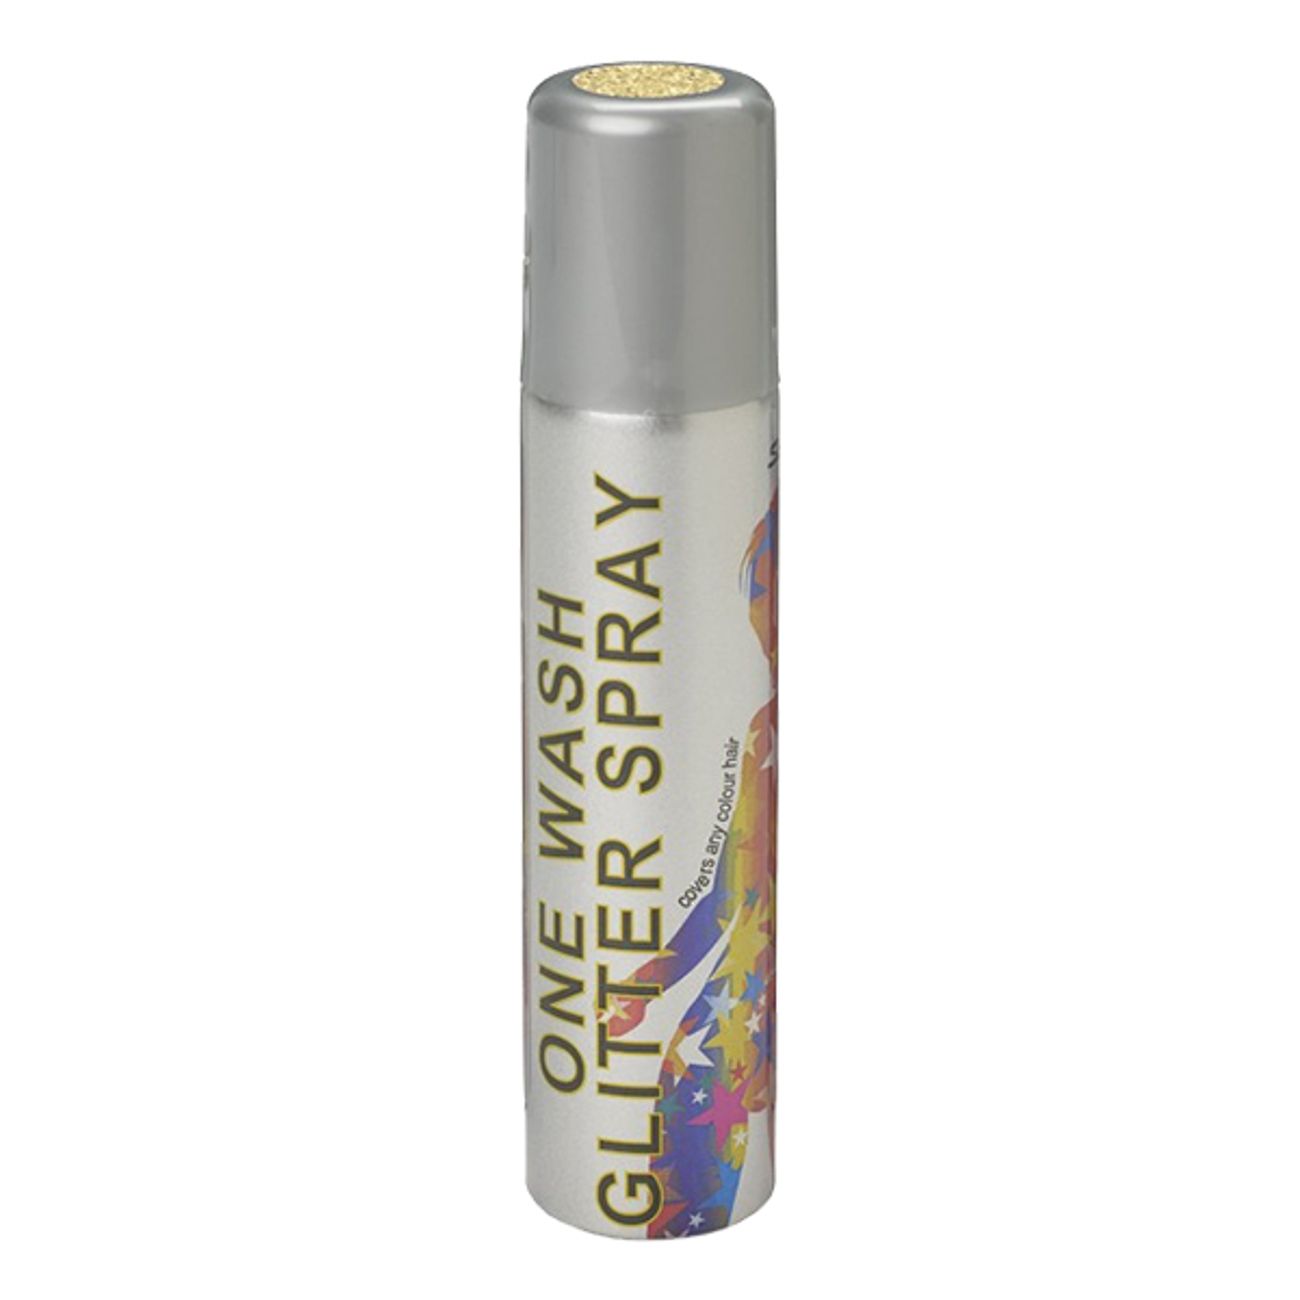 stargazer-glitterspray-3